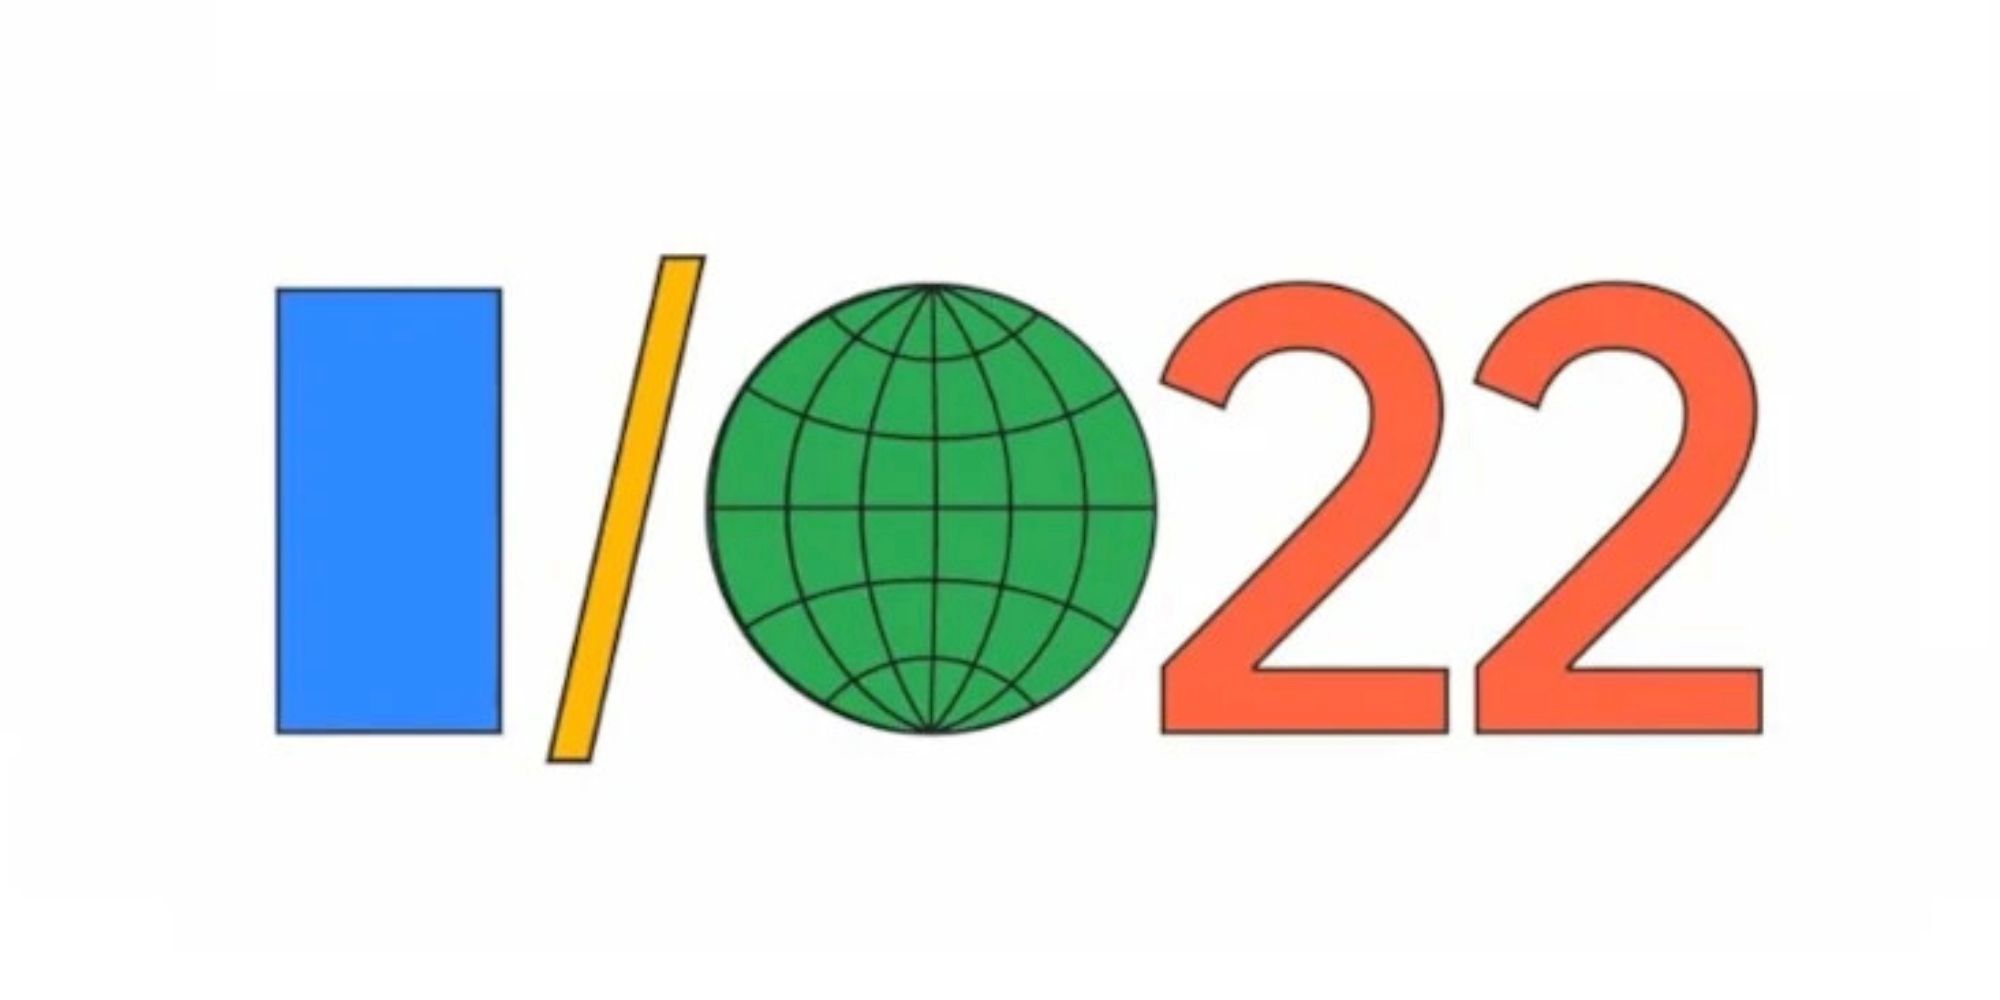 The Google I/O 2022 logo